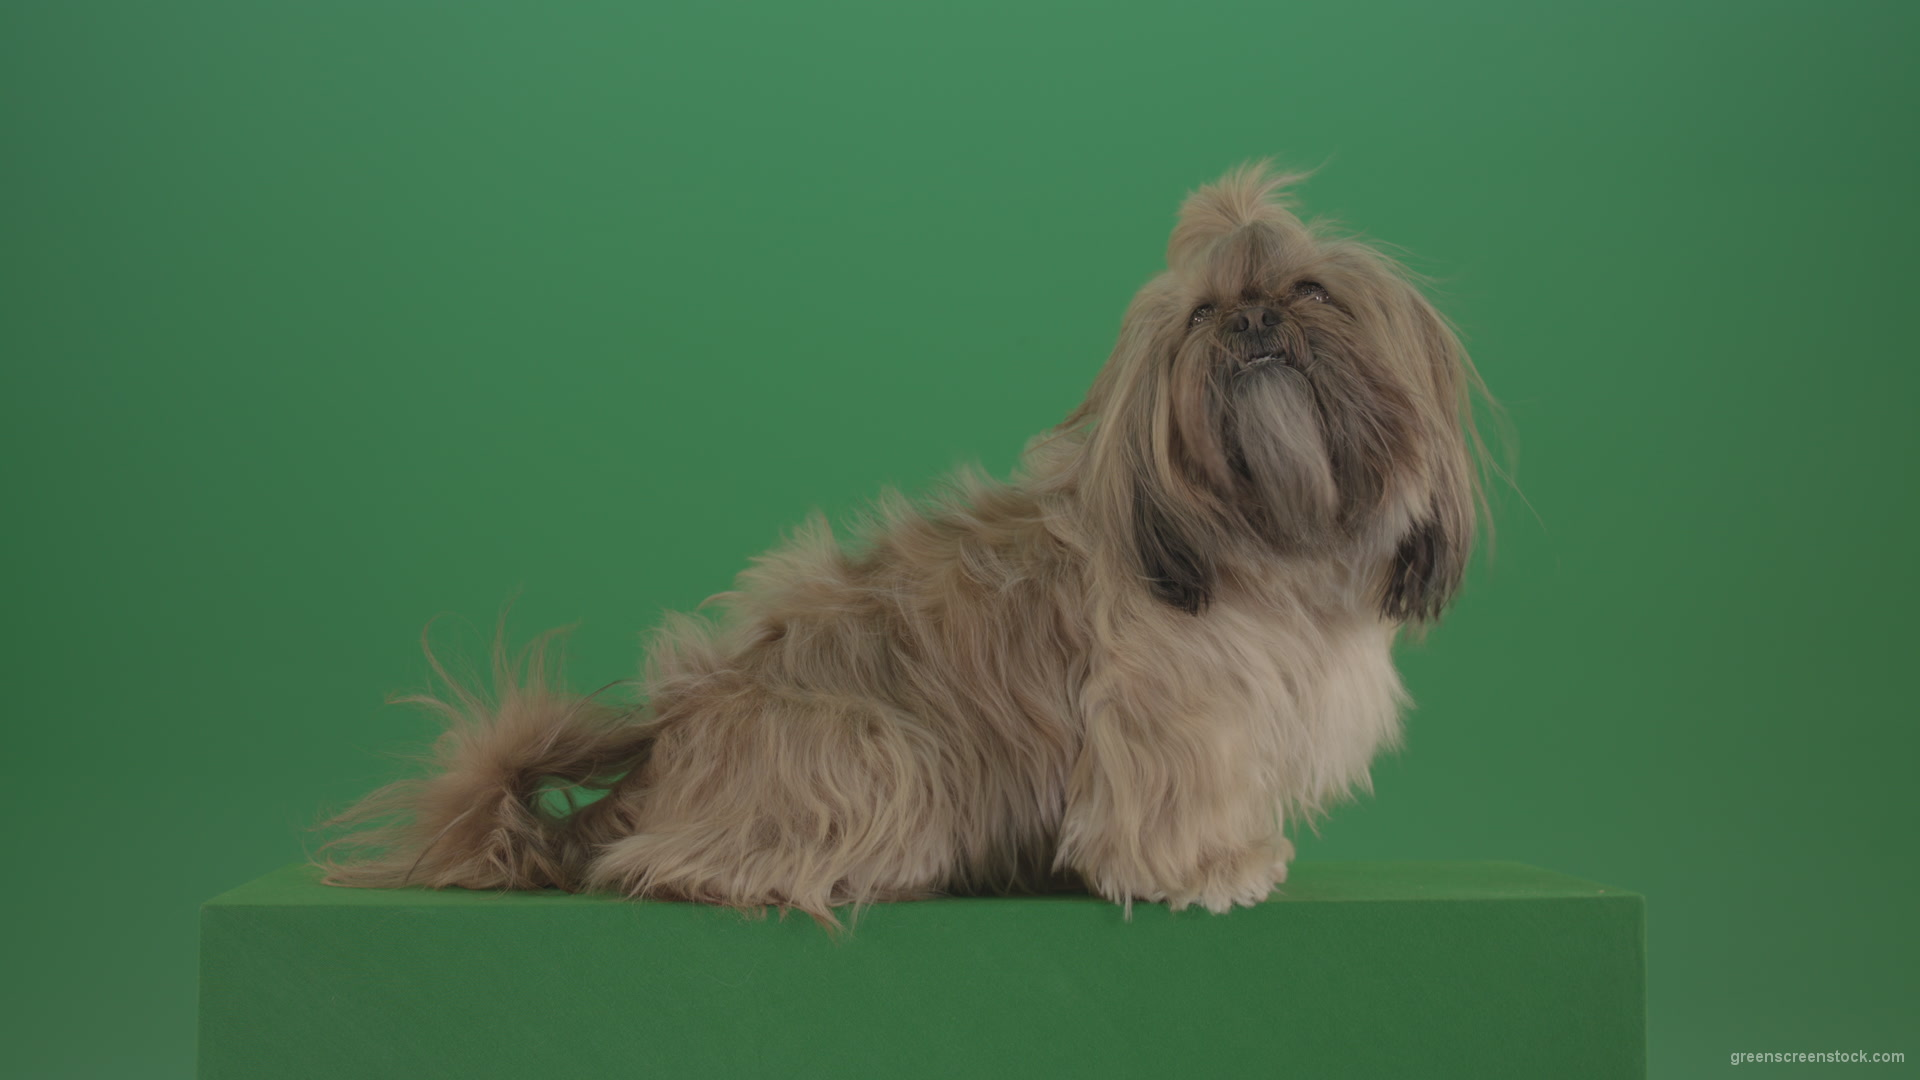 Greeen-Screen-Dog-Shih-Tzu-Small-puppy-in-winter-storm-isolated-on-green-screen_009 Green Screen Stock